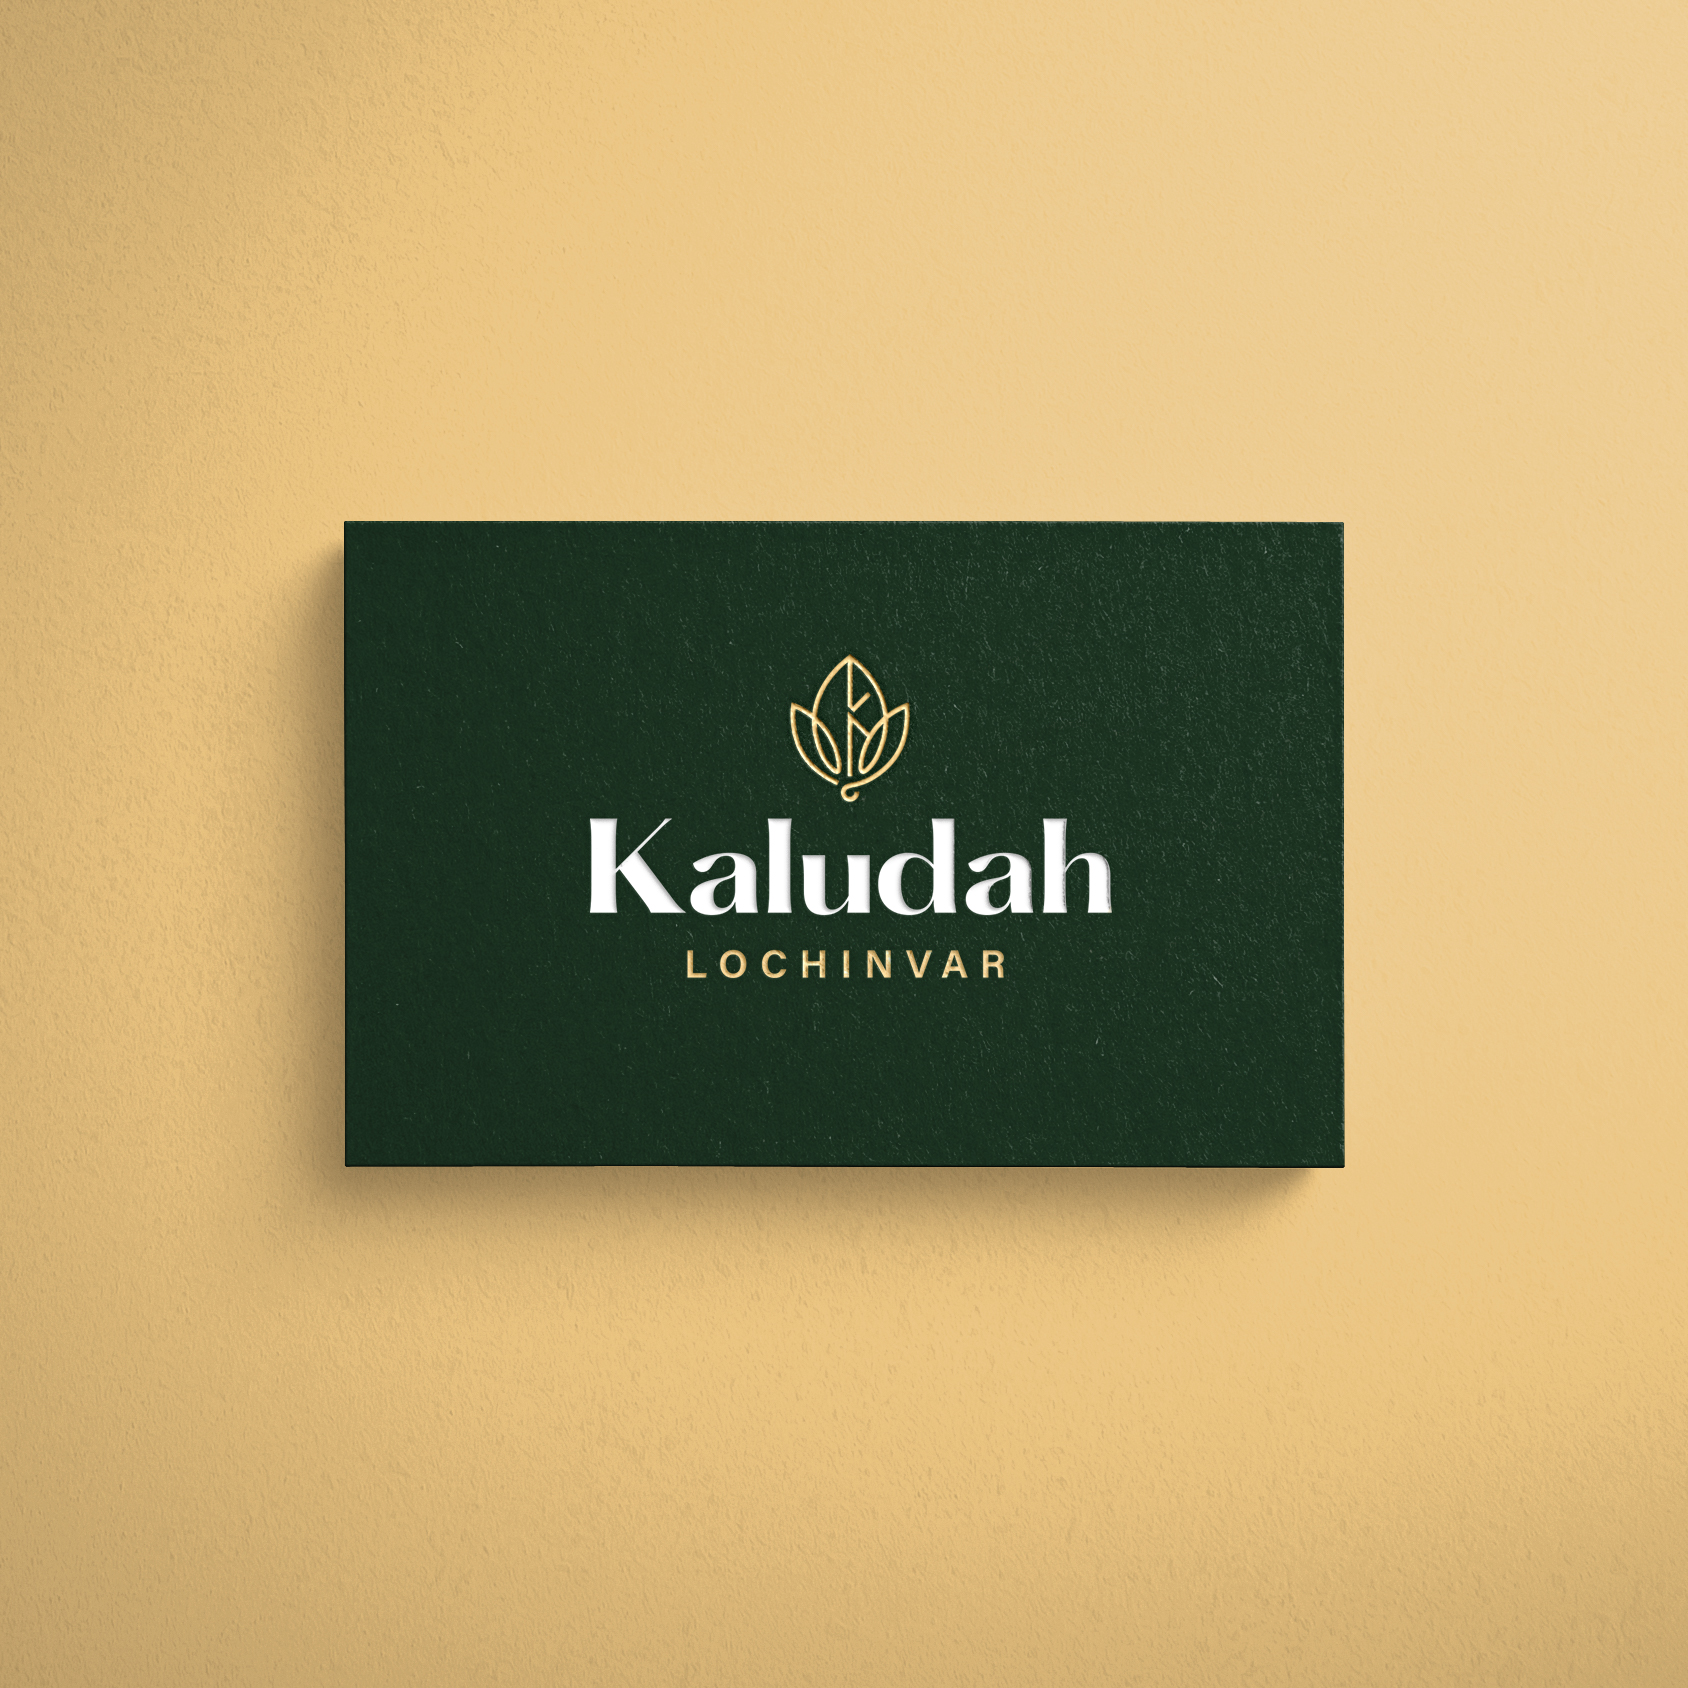 kaludah lochinvar business card branding